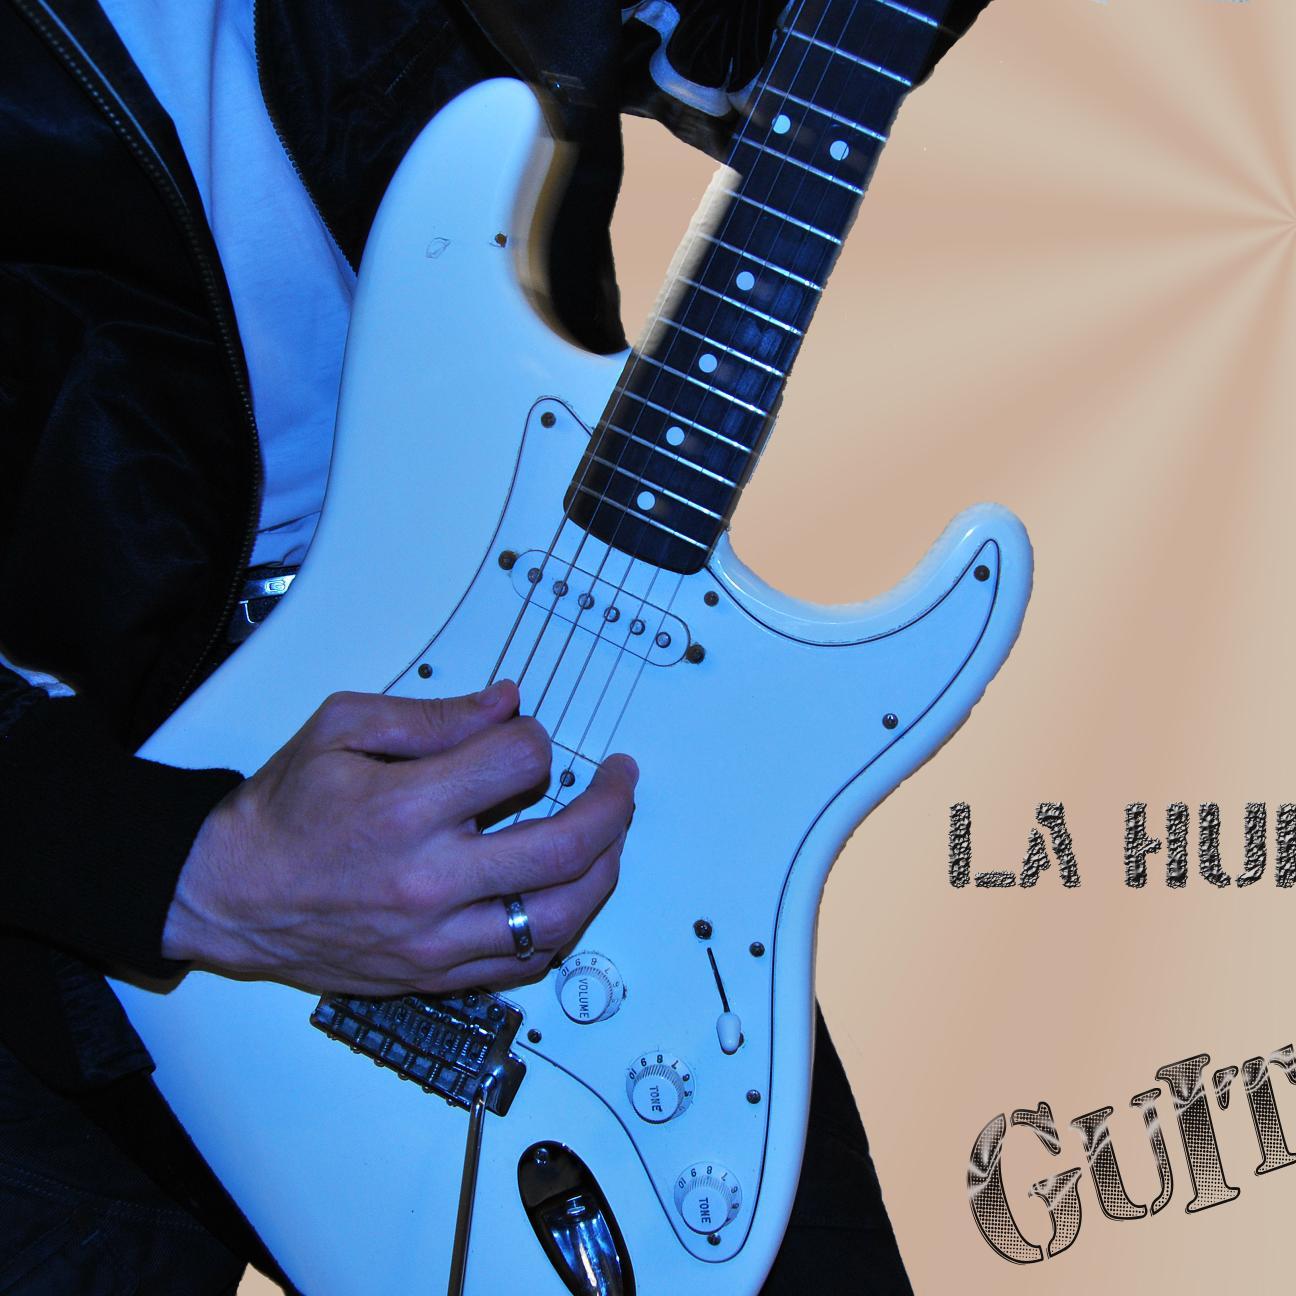 Cantante y guitarrista de La Huella. Clases de guitarra GRATIS en mi canal de Youtube,LAHUELLAGUITAR. http://t.co/v3JSuv57EW